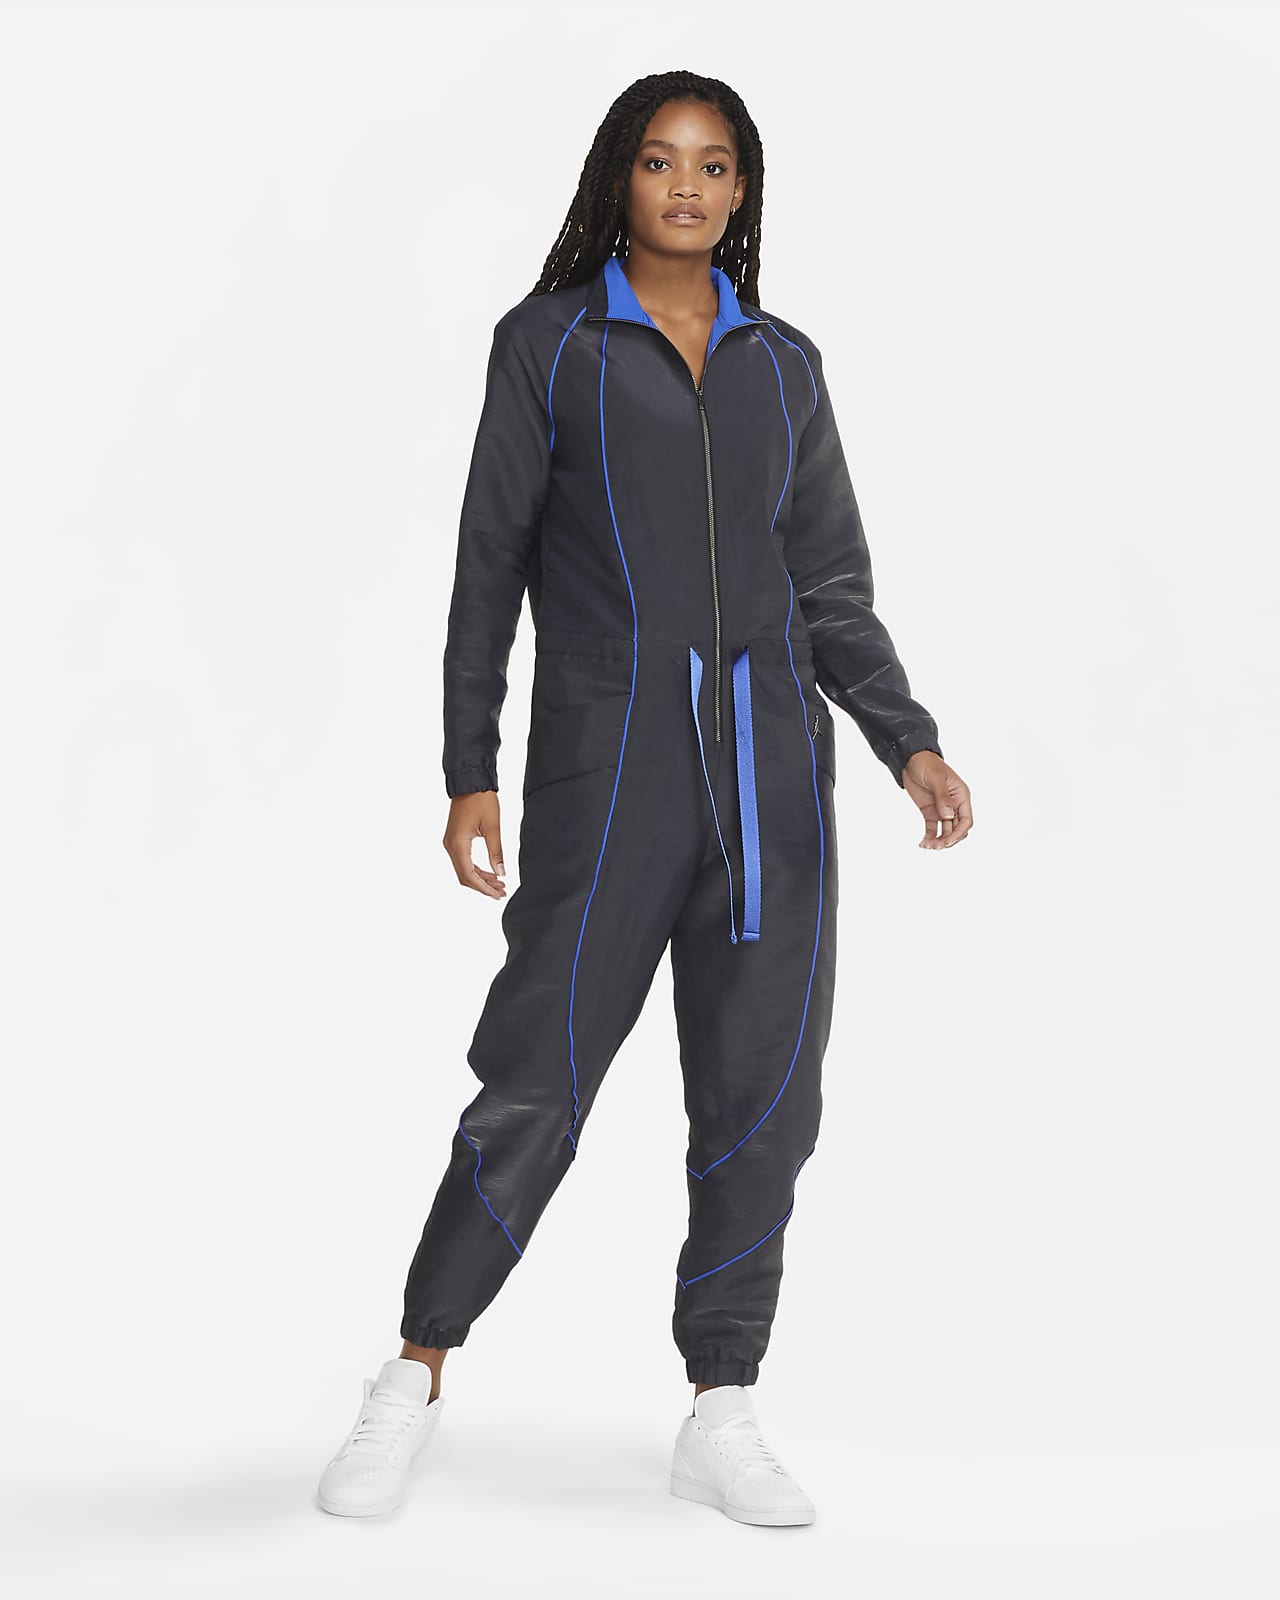 Jordan Women's Flight Suit. Nike.com